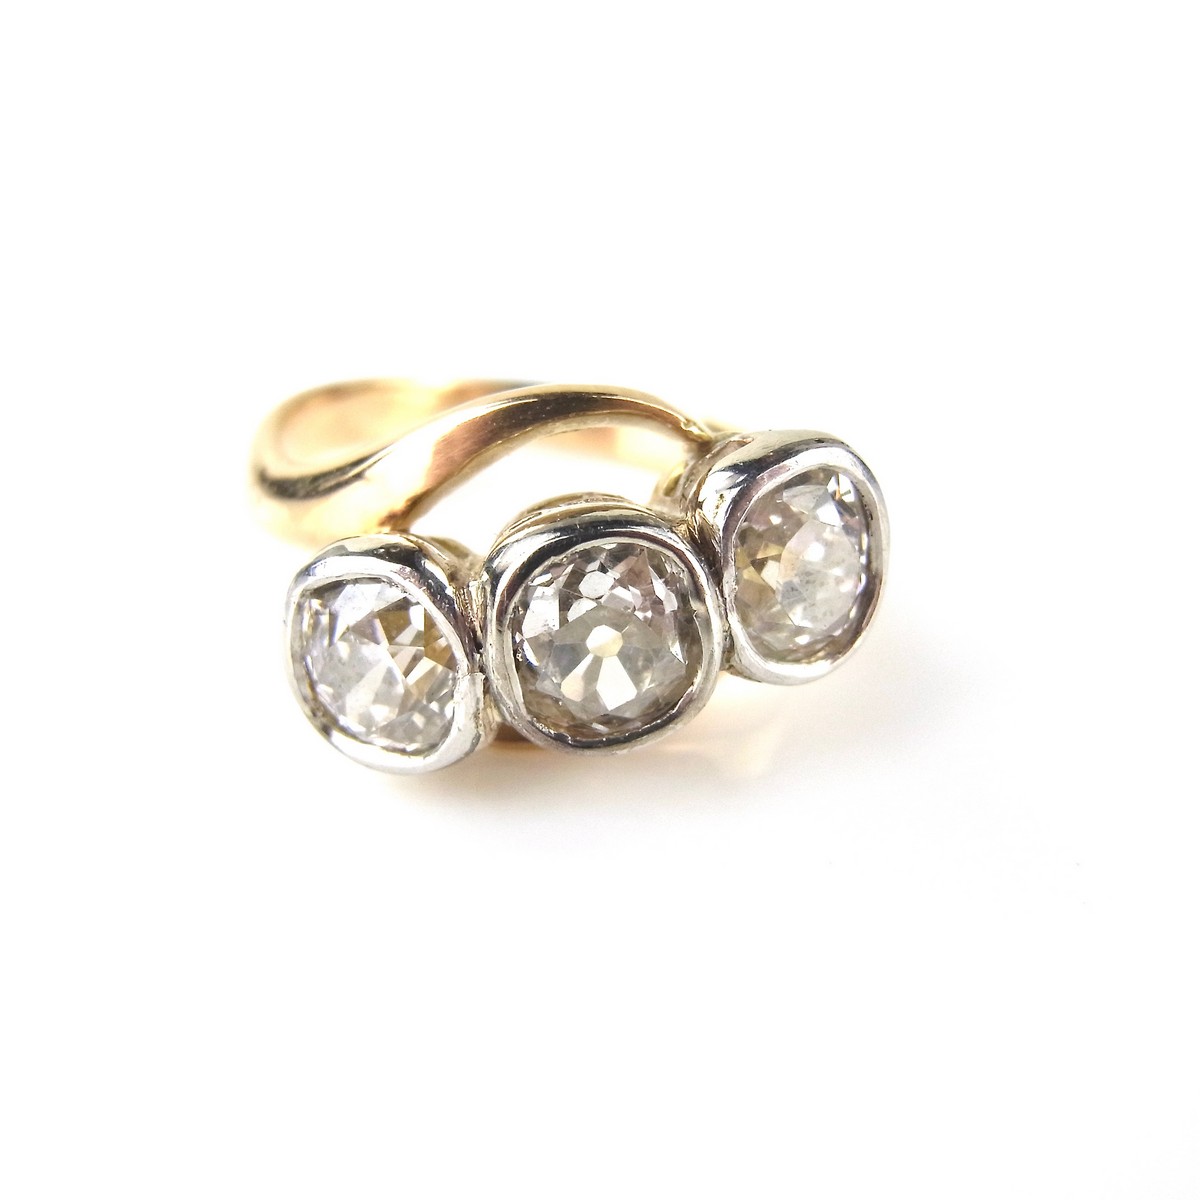 Yellow gold three stone diamond ring, tests 18 ct. - Image 2 of 2